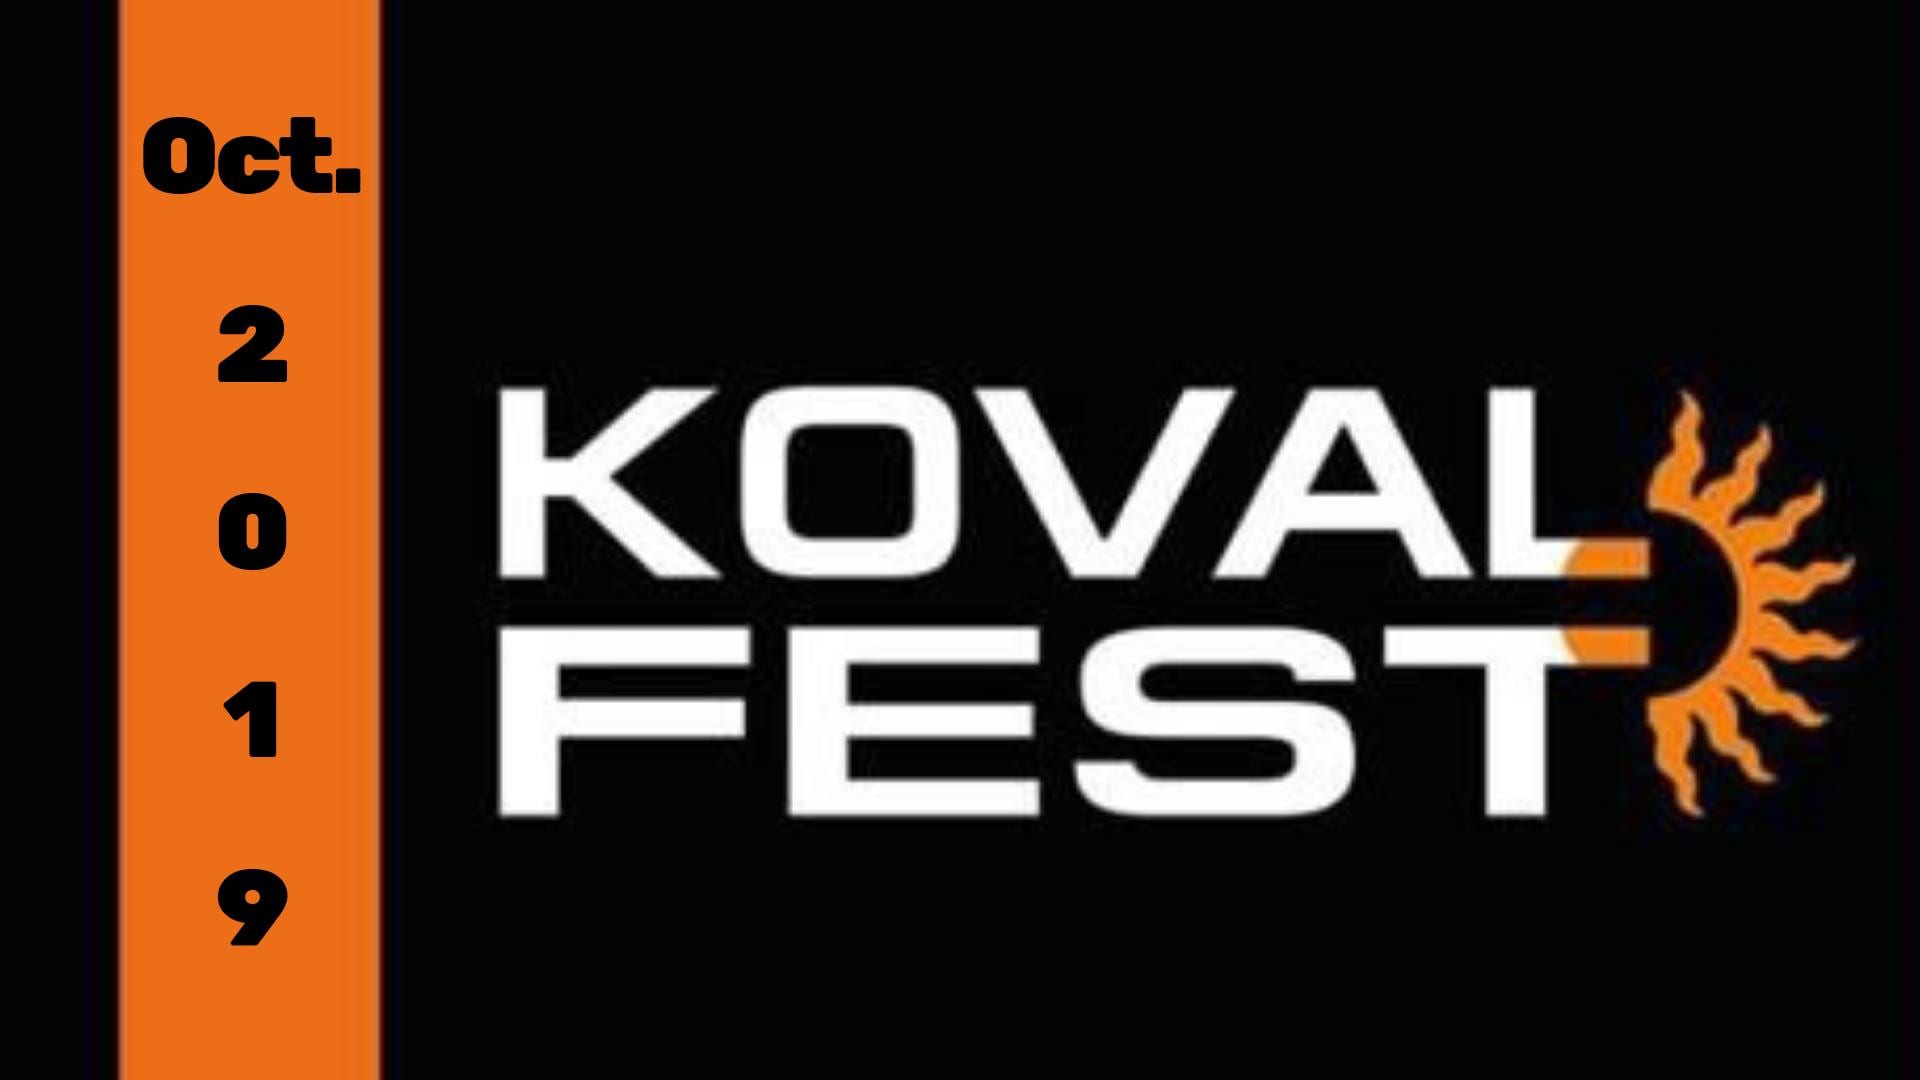 Koval Fest 2019 Днепр, 12.10.2019, цена, даты, купить билеты. Афиша Днепра